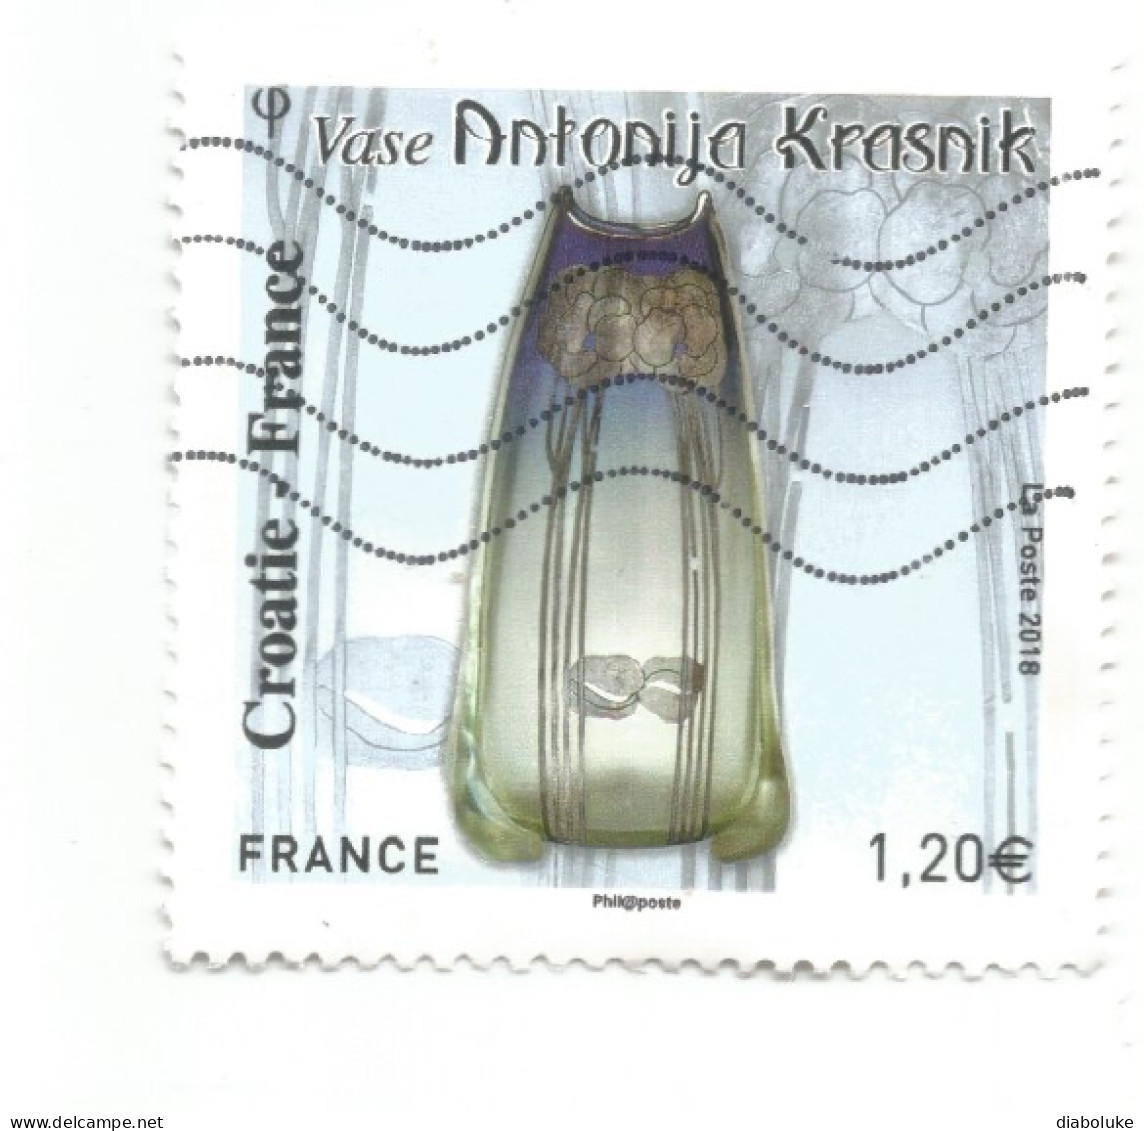 (JOINT ISSUE) 2018, VASE BY ANTONIJA KRASNIK - Used Stamp - Used Stamps